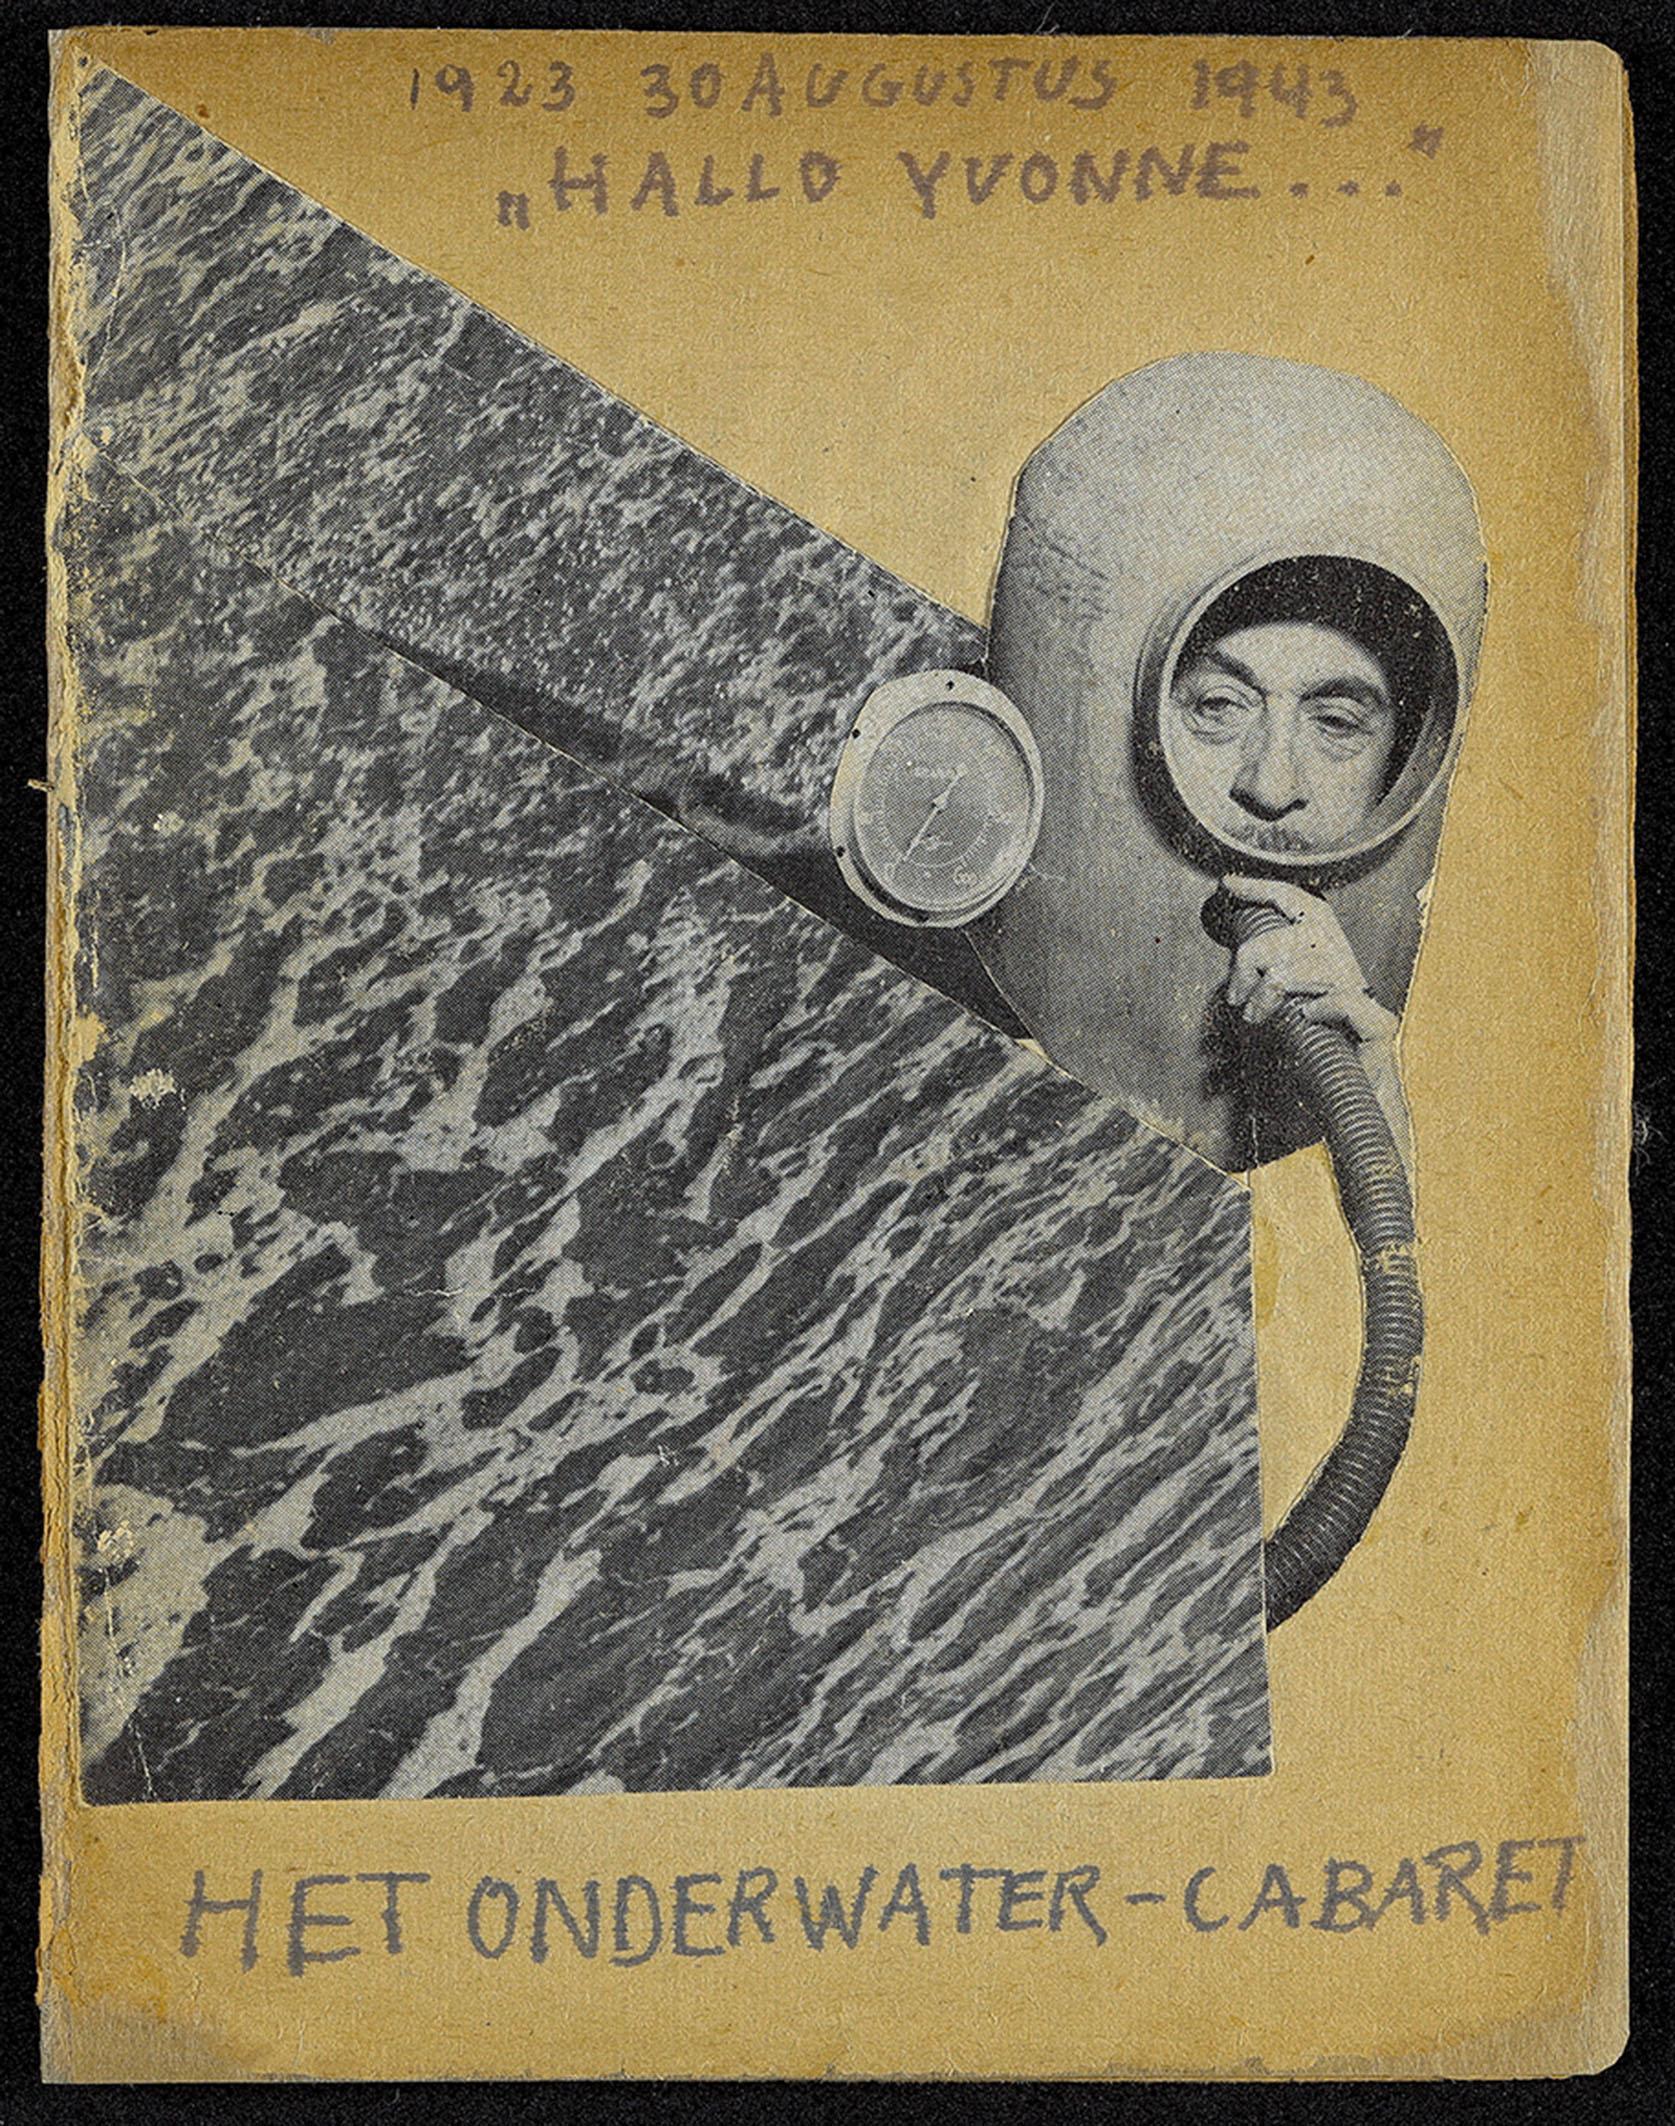 Curt Bloch, Het Onderwater Cabaret, Magazine cover from Aug. 30,1943 